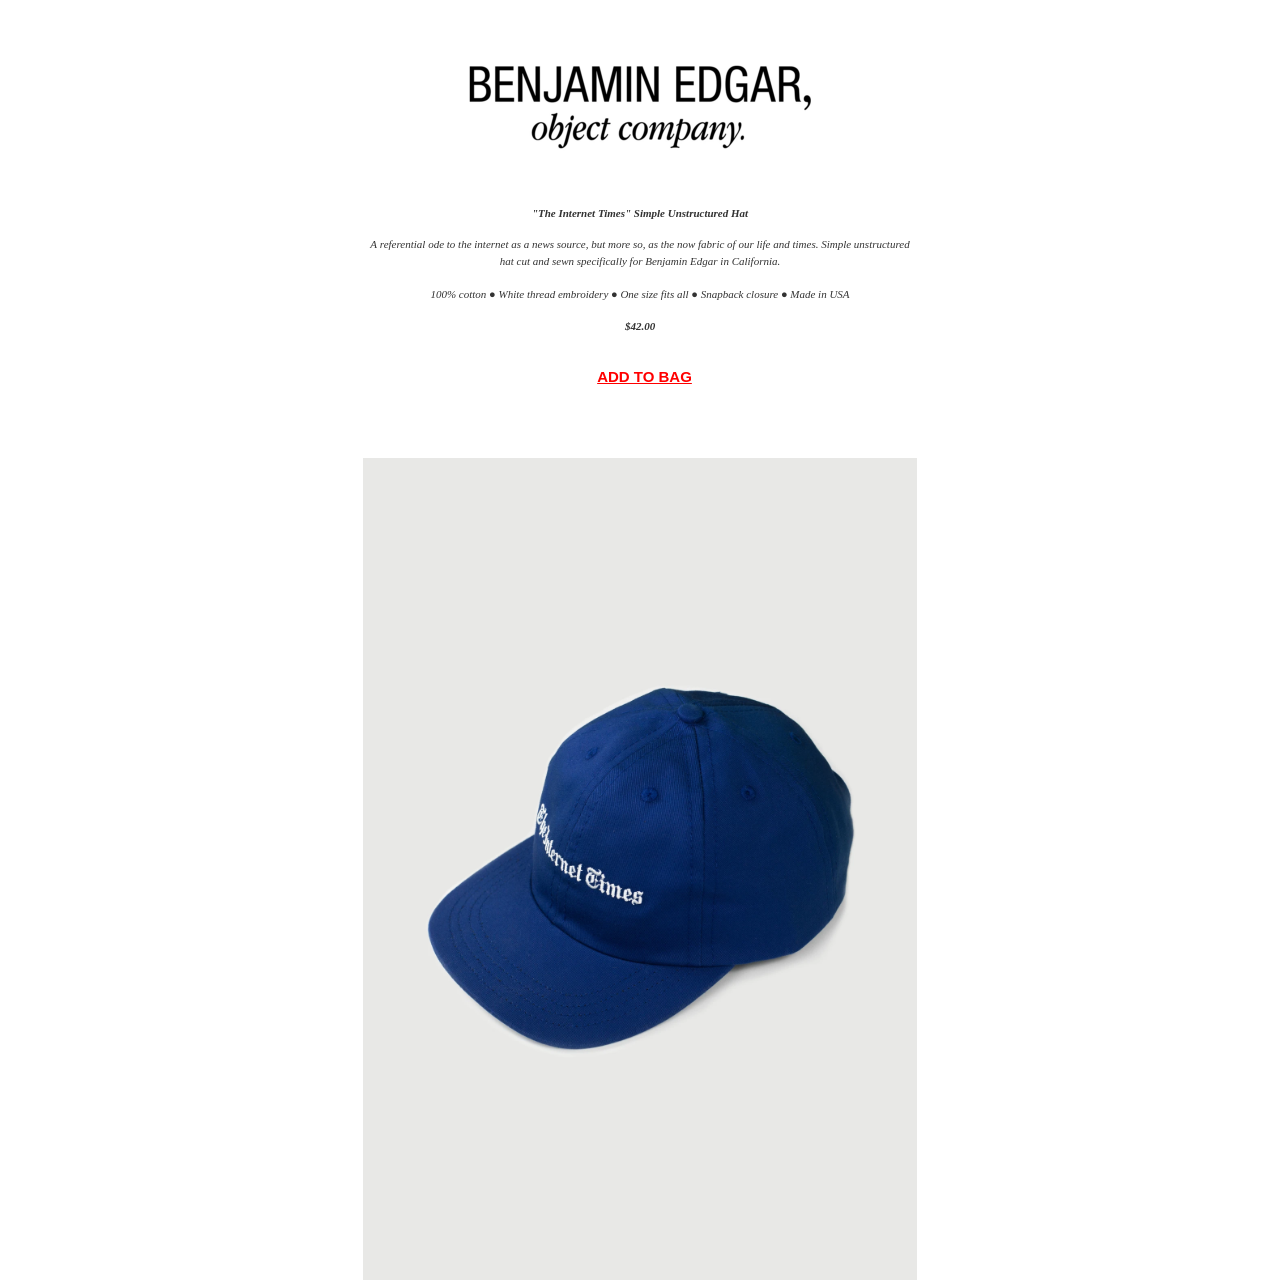 BENJAMIN EDGAR "The Internet Times" HAT